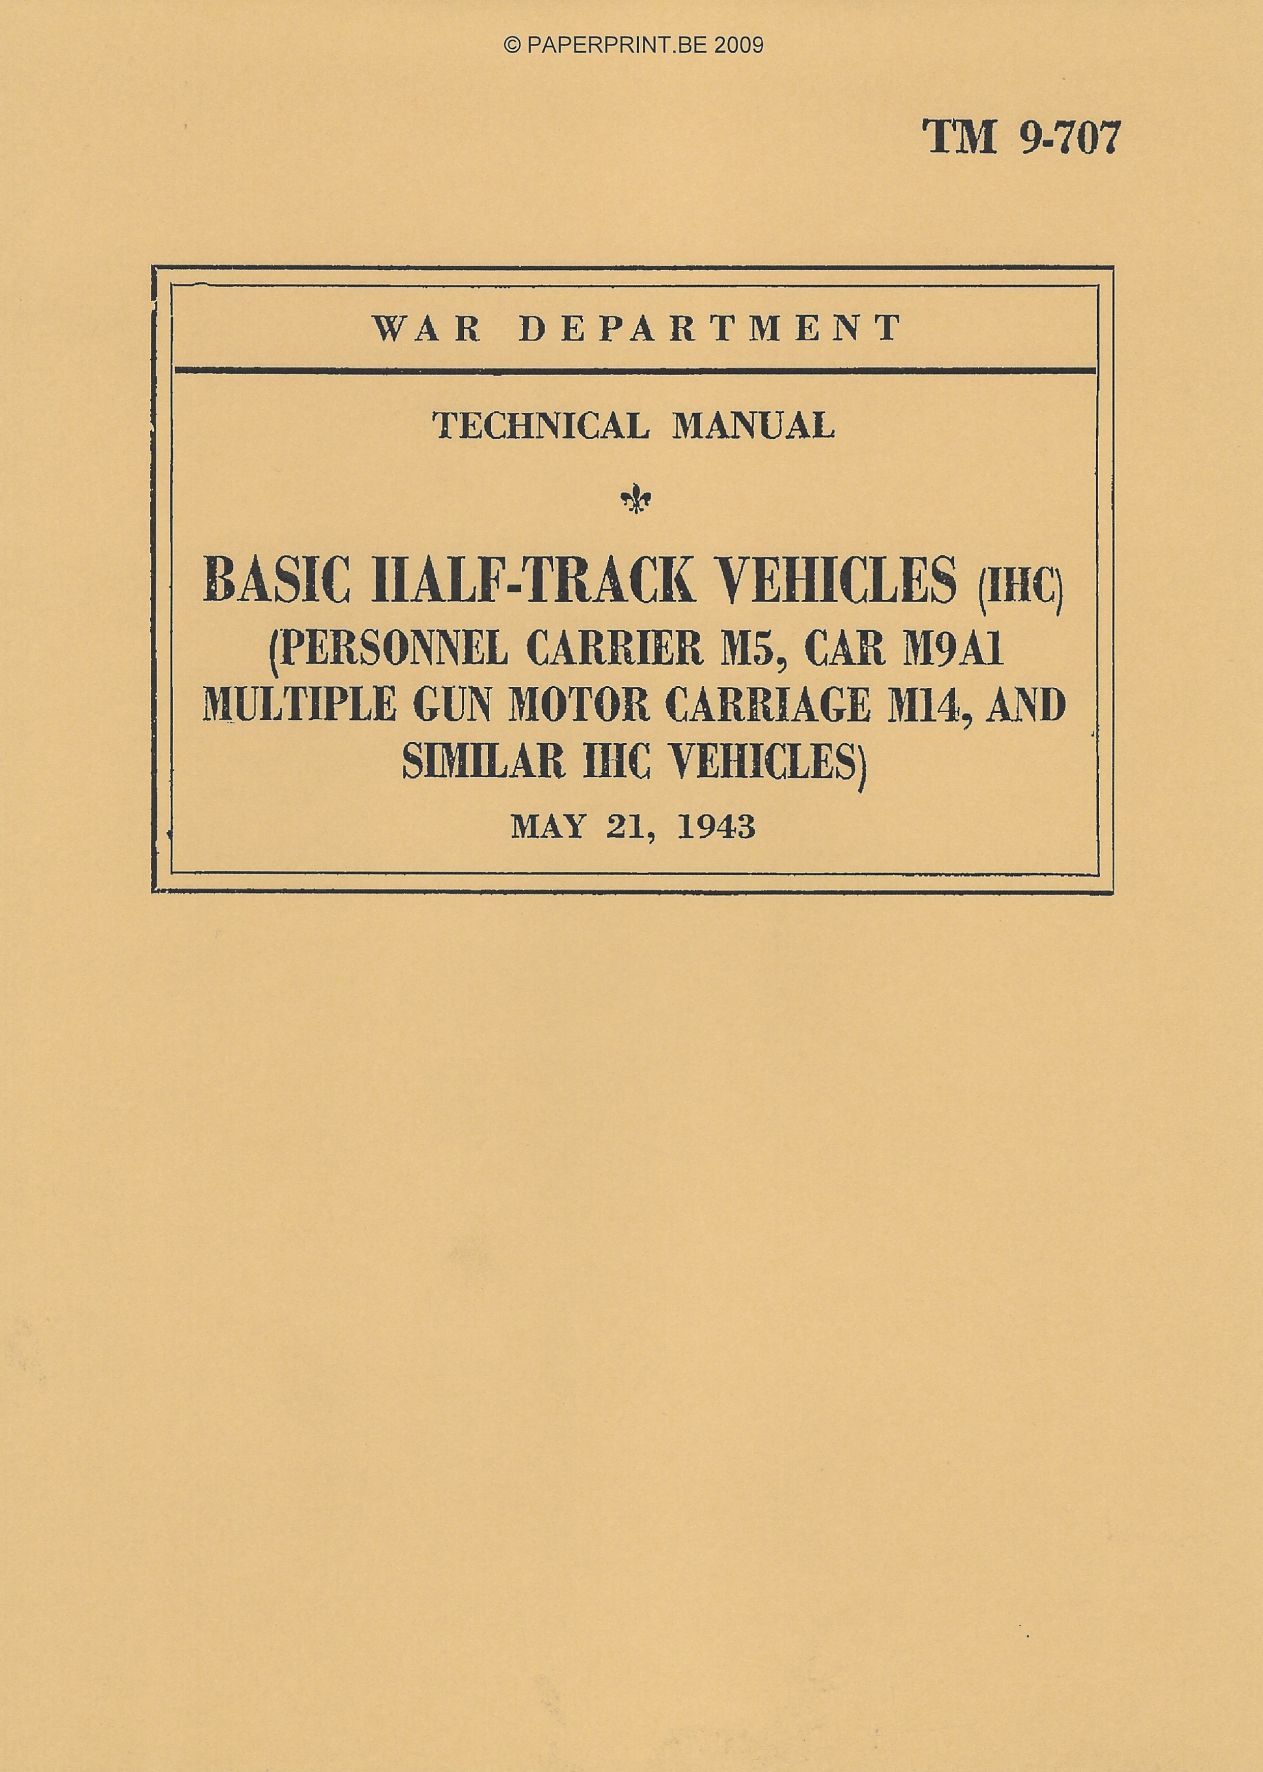 TM 9-707 US BASIC HALF-TRACK VEHICLES (IHC)